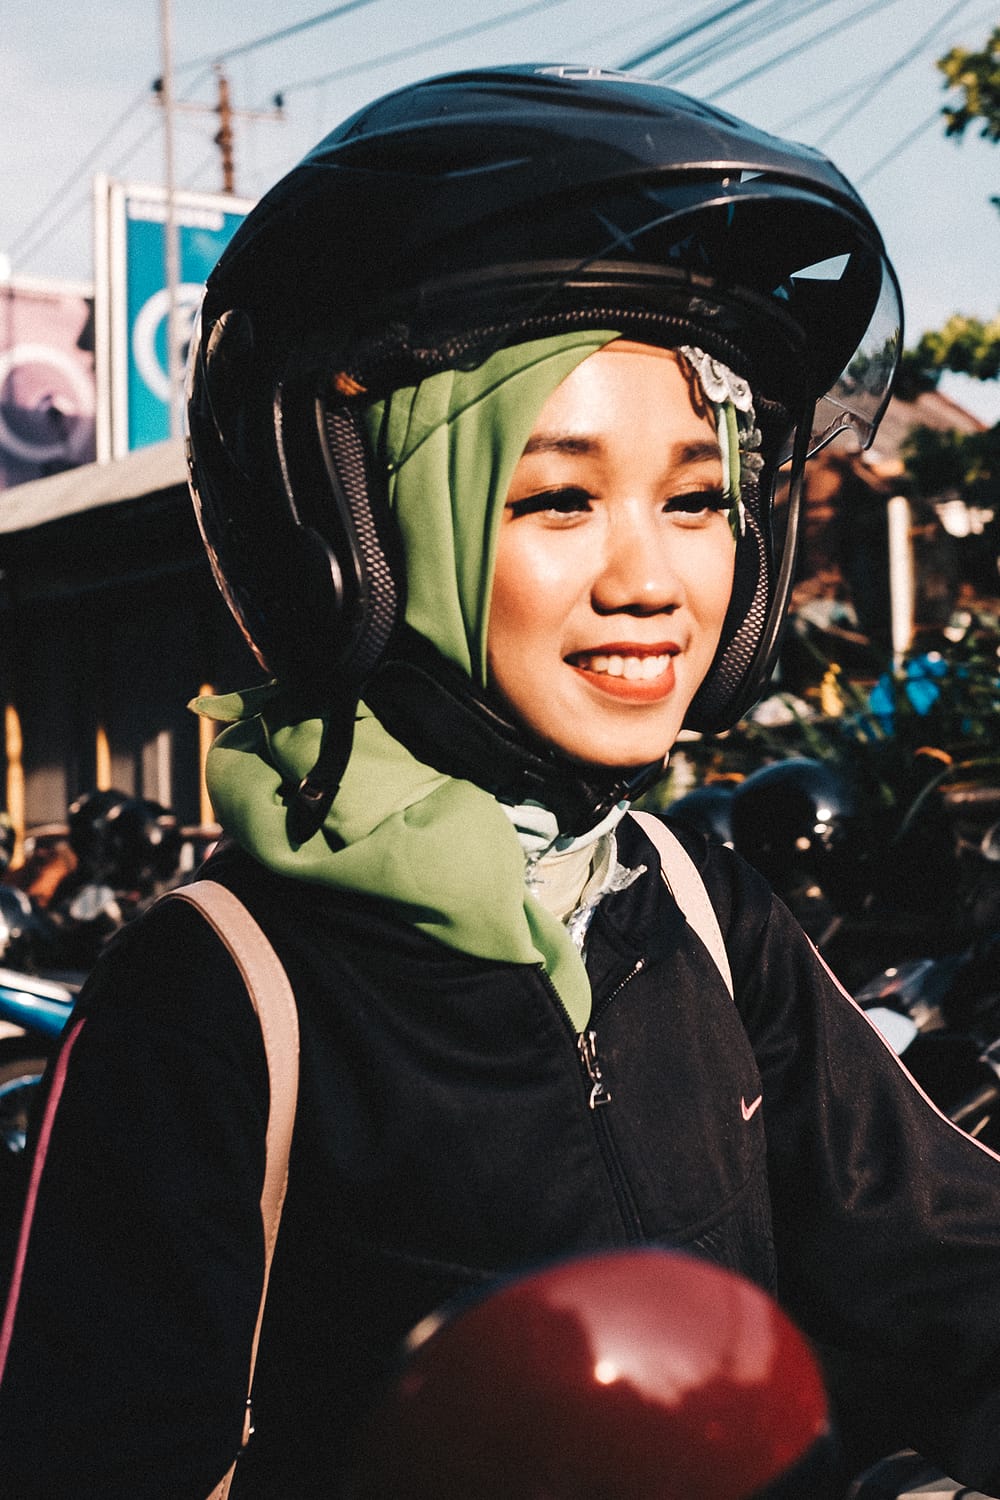 Indonesia 08 Yogyakarta Happy On the Bike 2018